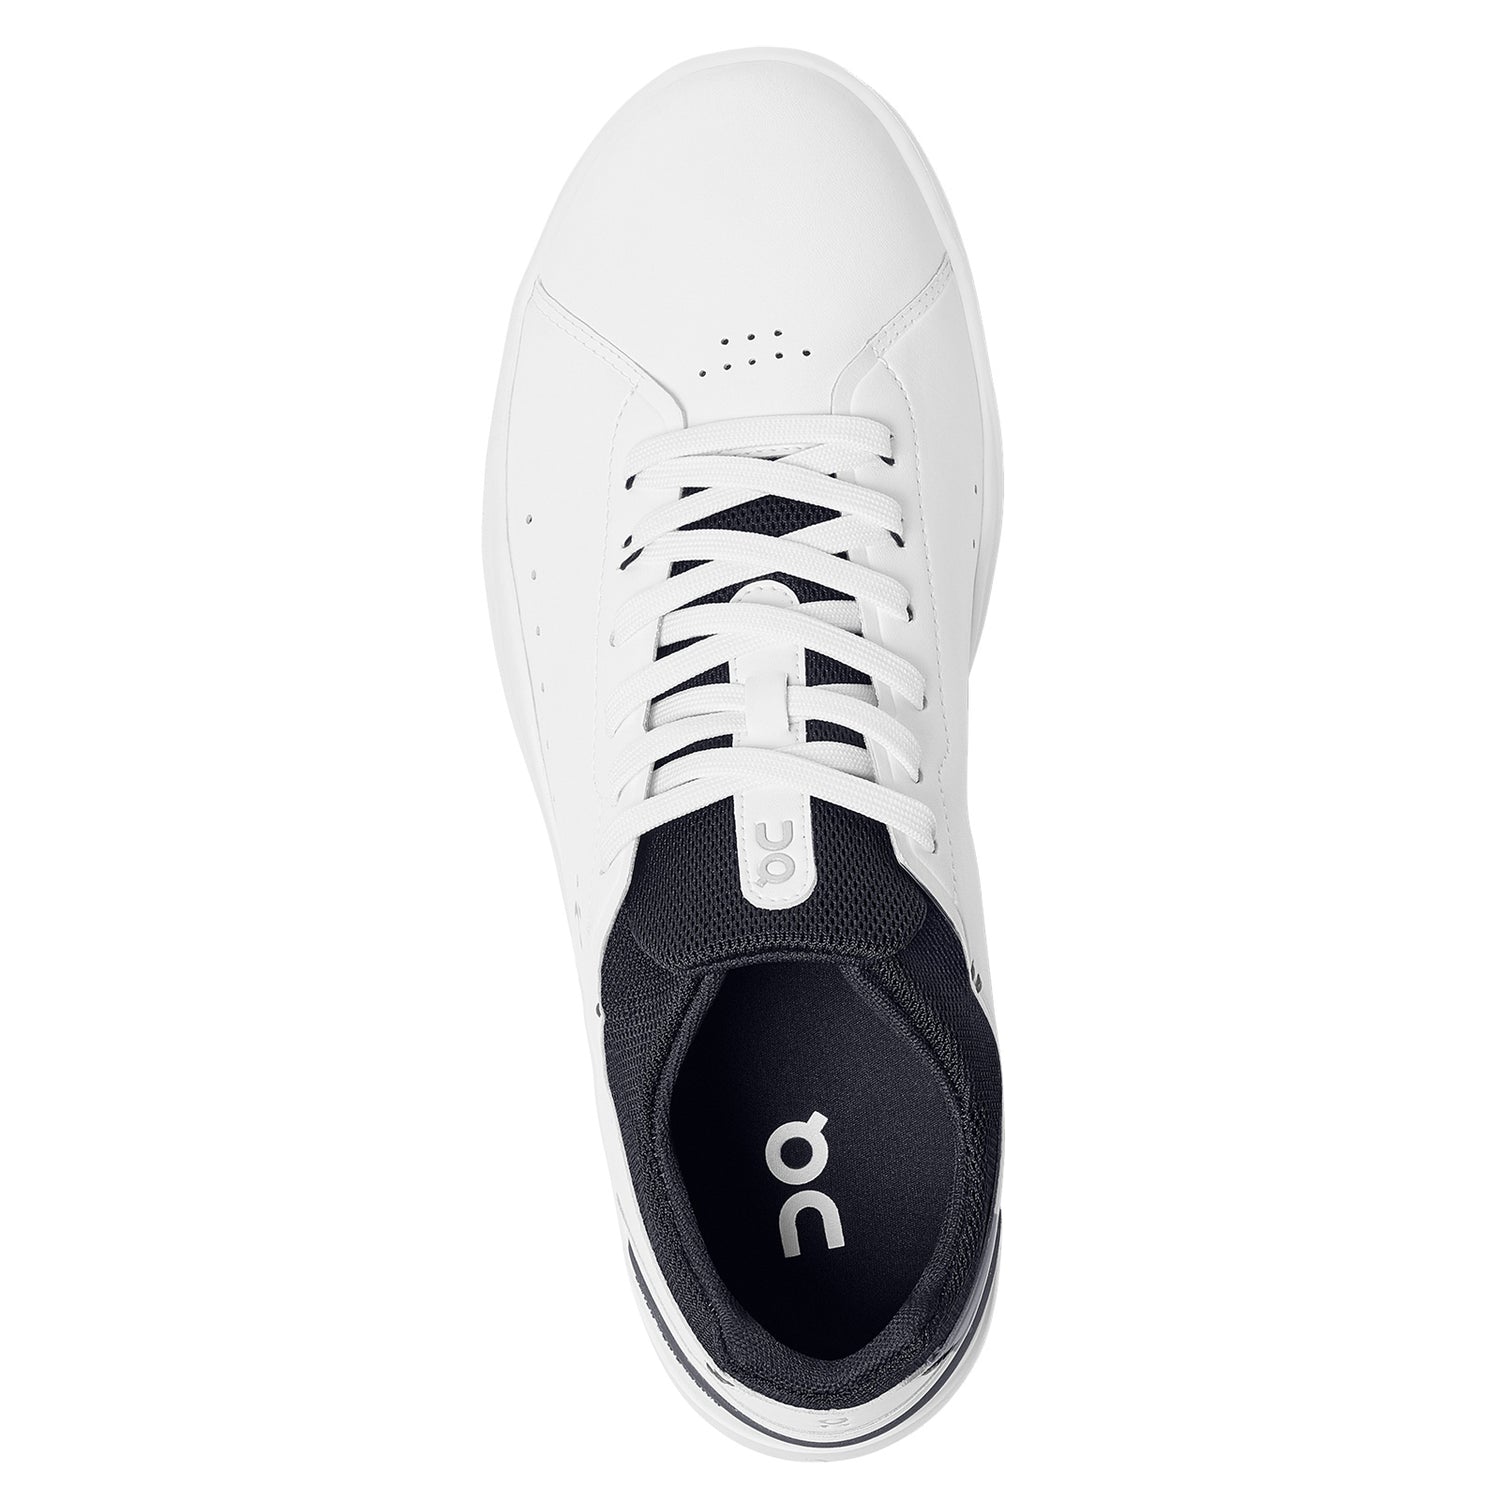 Peltz Shoes  Men's On Running The Roger Advantage Tennis Shoe WHITE/MIDNIGHT 48.99457